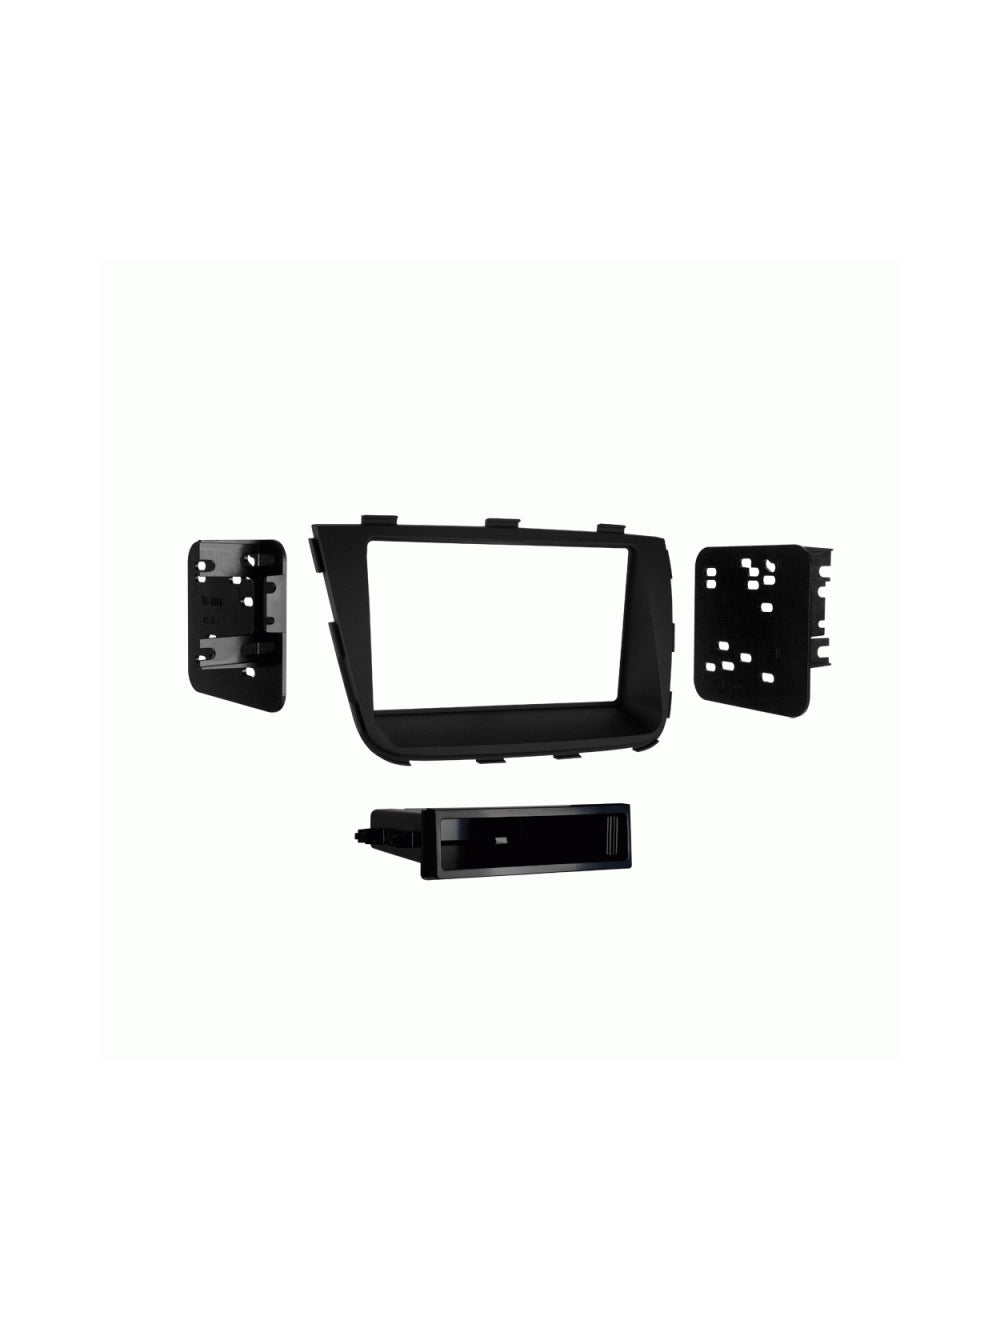 Metra 99-7355B Single/Double DIN Car Stereo Installation Dash Kit for 2014-2015 Kia Sorento Black